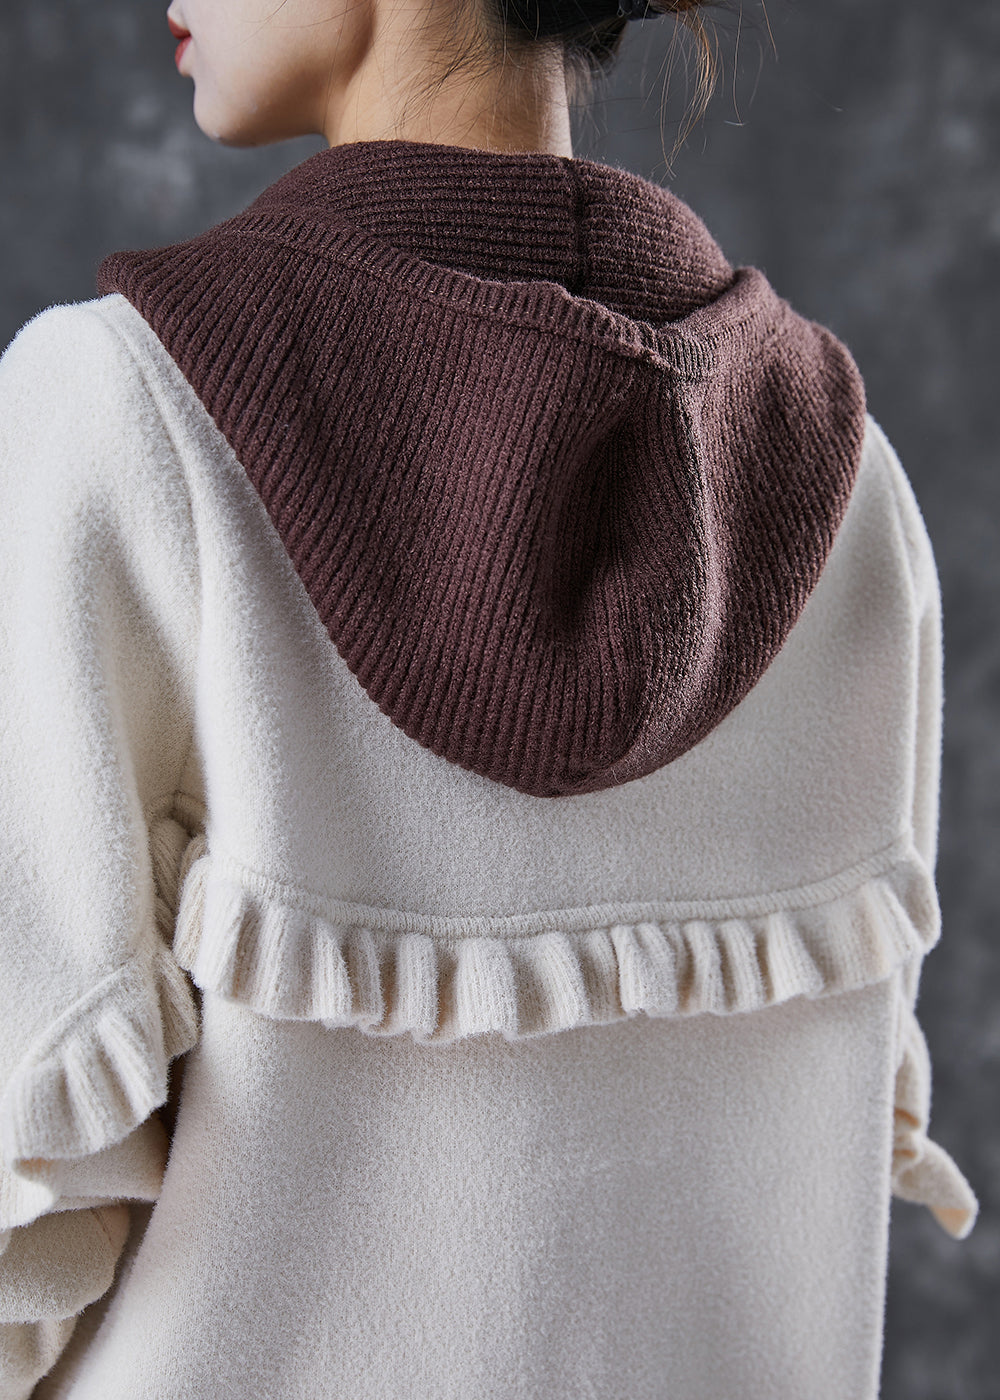 Elegant White Hooded Patchwork Ruffled Woolen Coats Spring